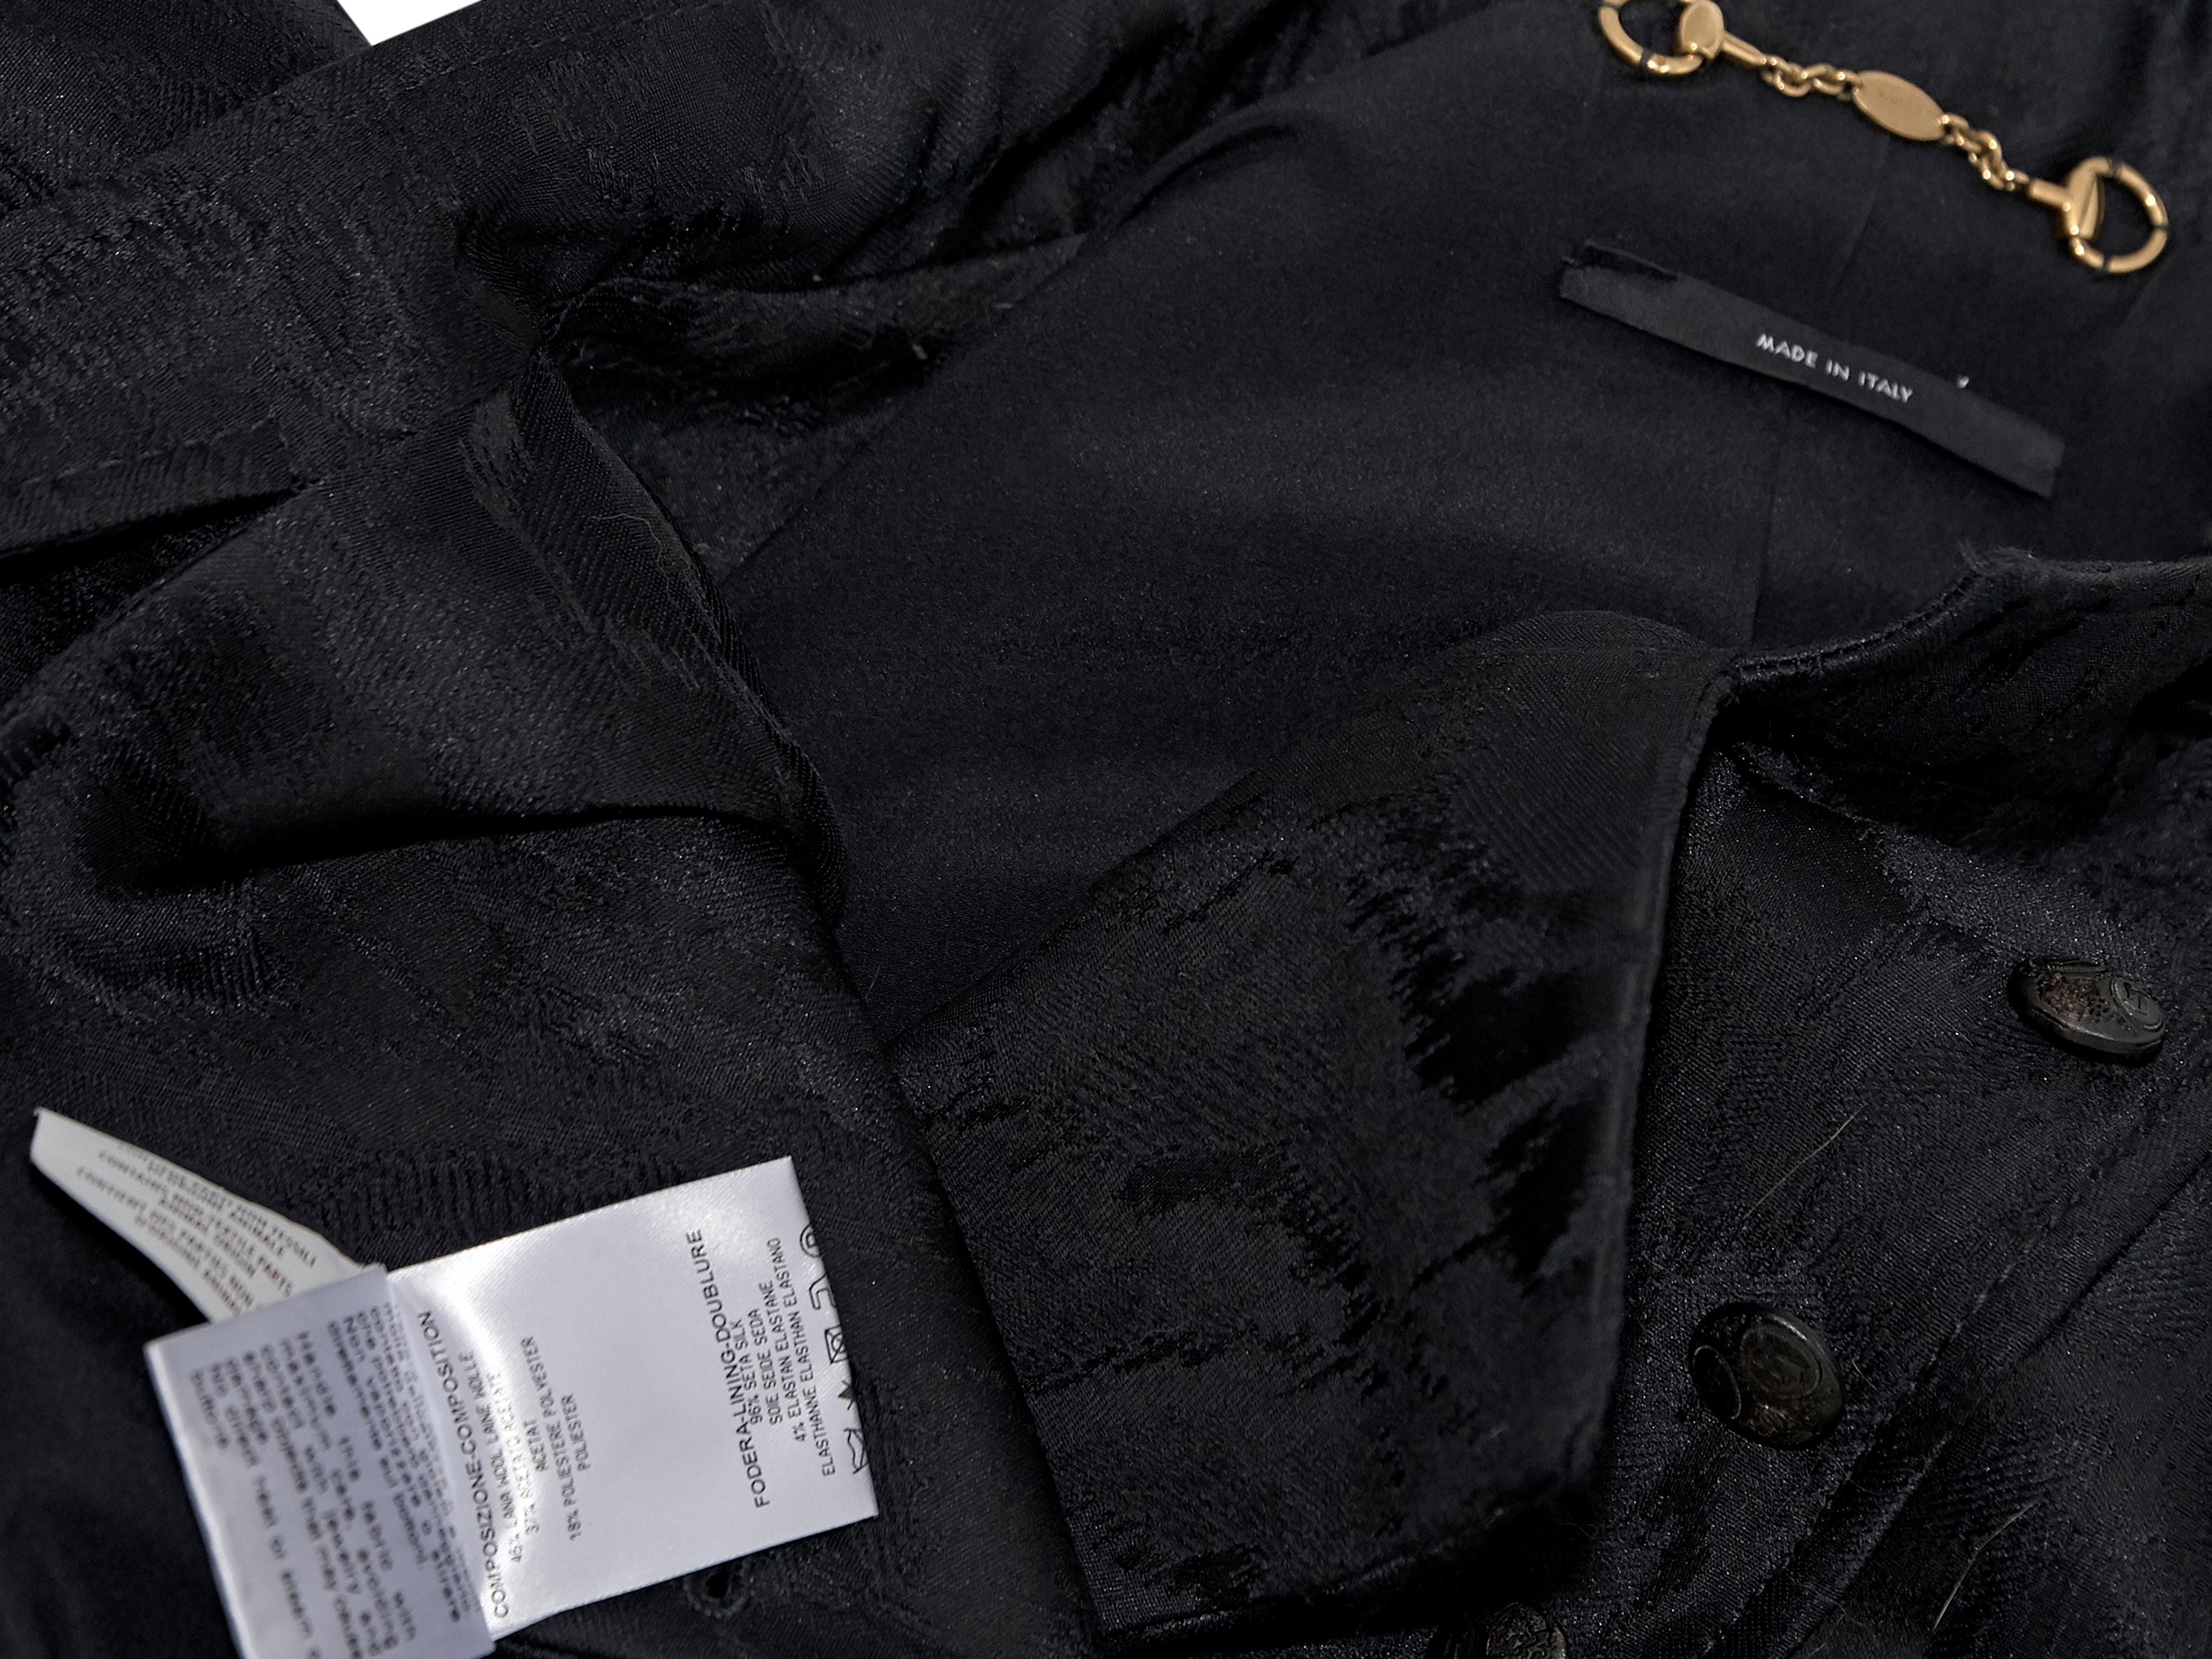  Gucci Black Brocade Wool-Blend Jacket 1